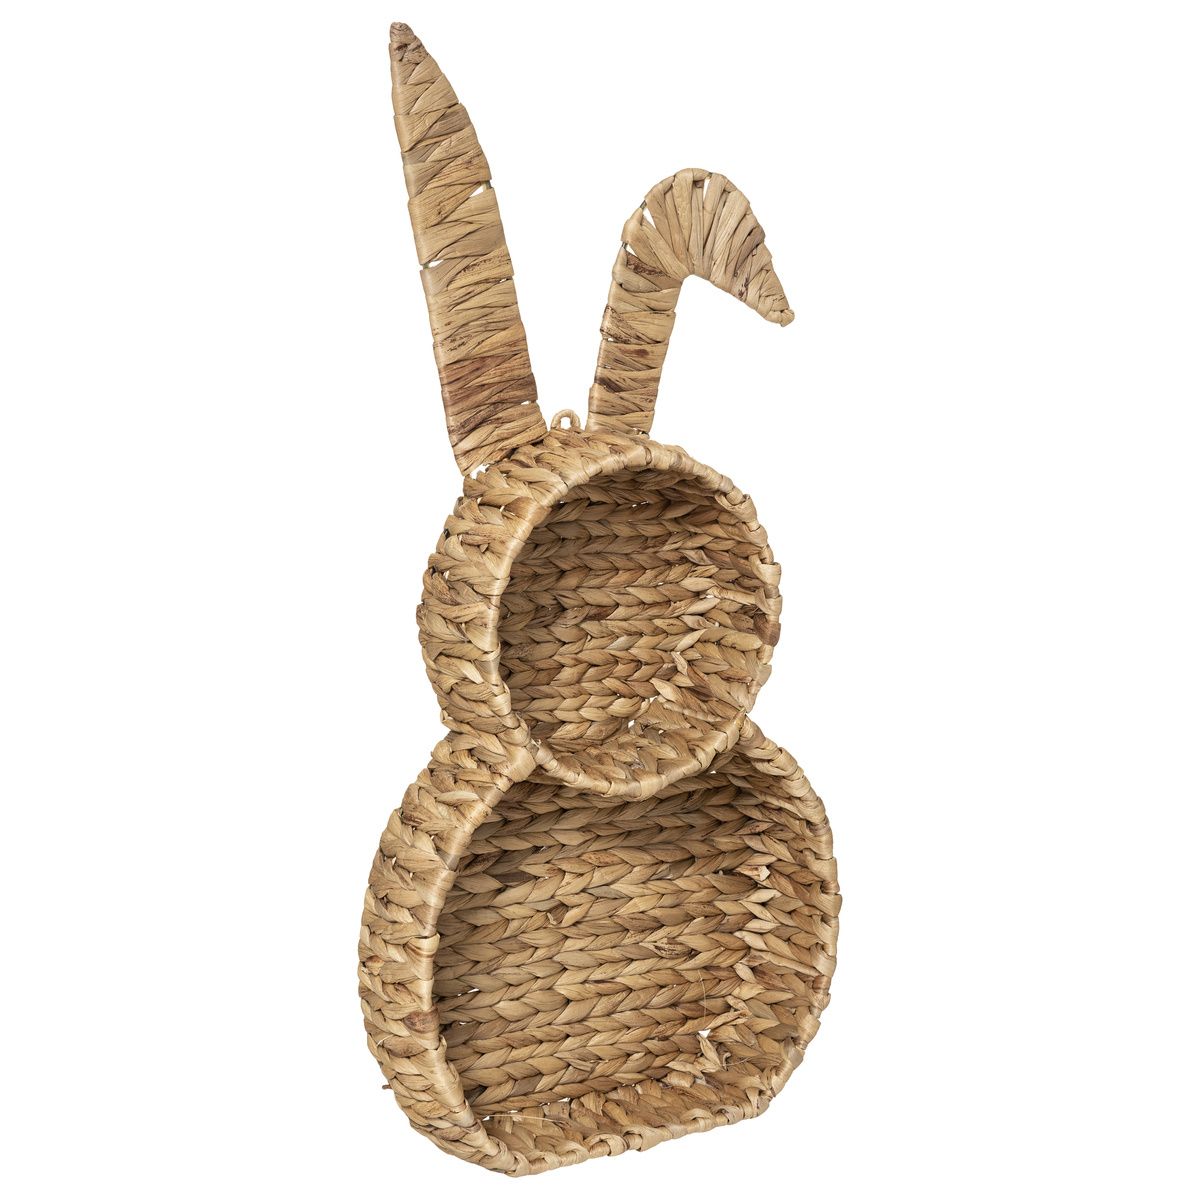 Atmosphera for kids Polička z mořské trávy ve tvaru králíka, 30 x 53 cm - EMAKO.CZ s.r.o.